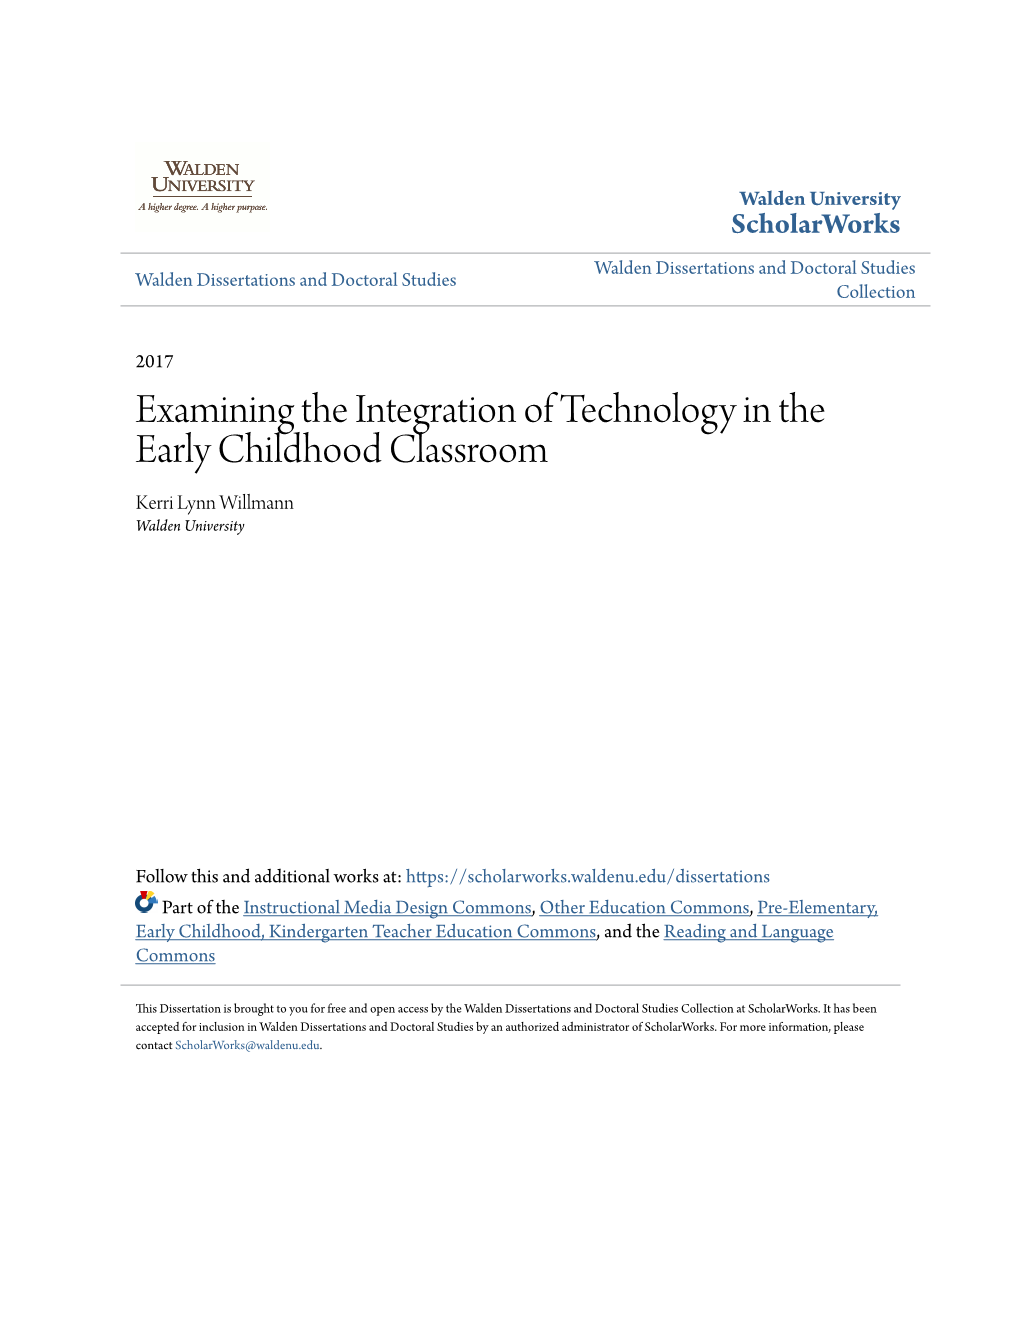 Examining the Integration of Technology in the Early Childhood Classroom Kerri Lynn Willmann Walden University